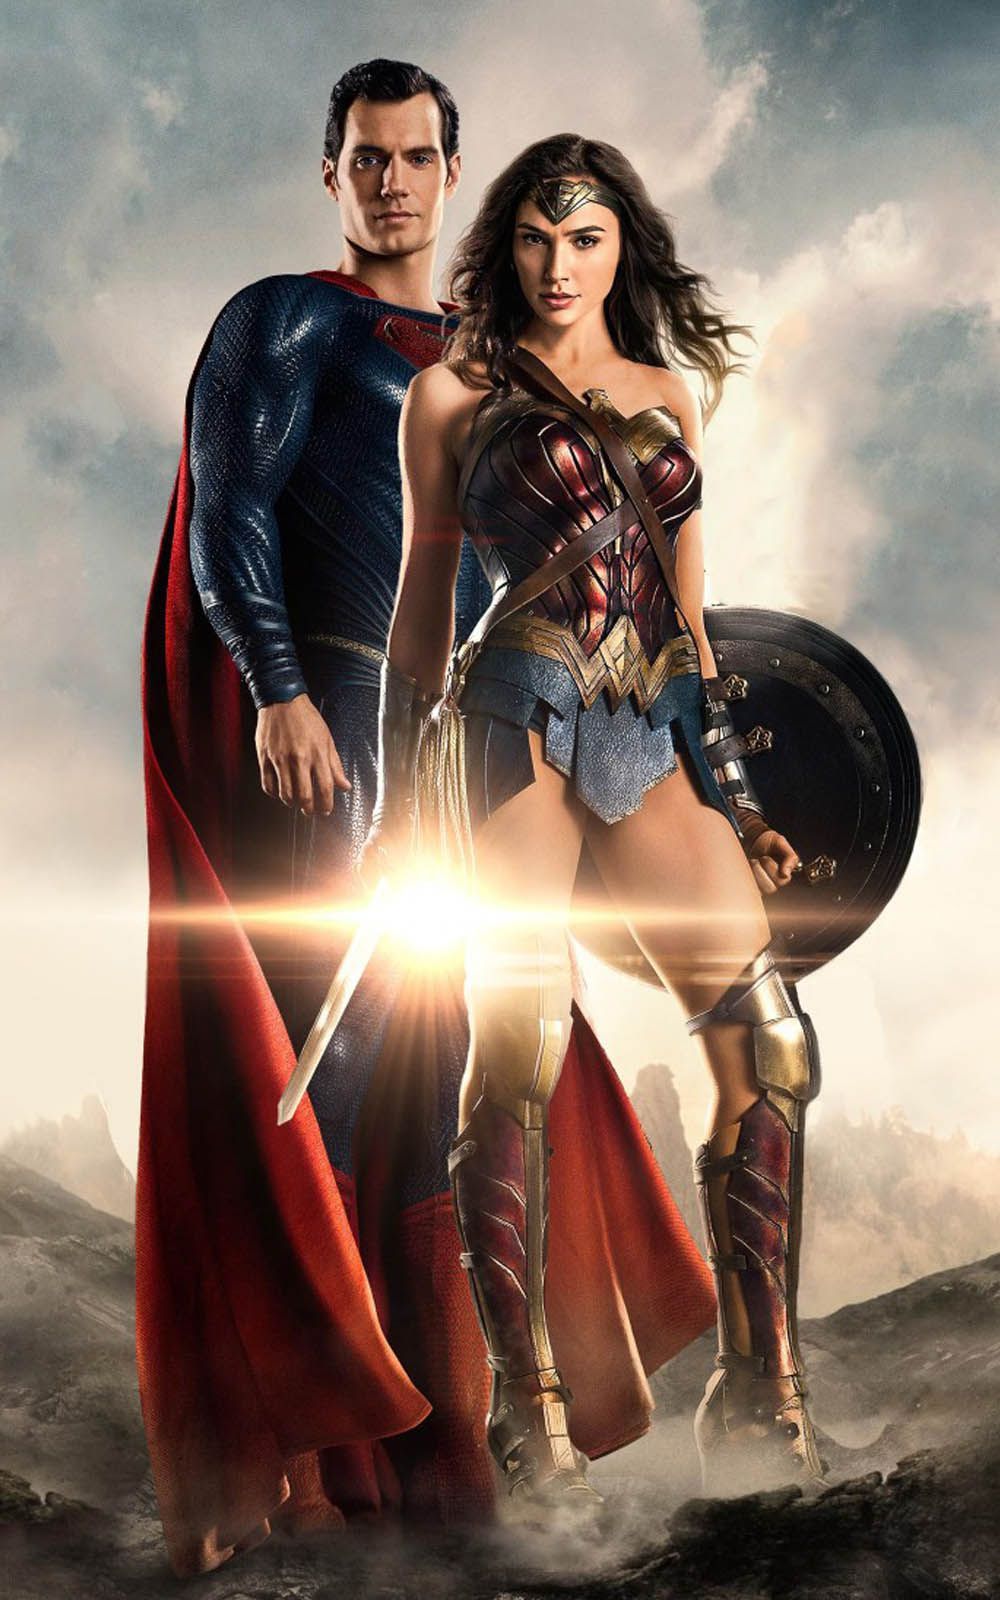 Superman And Wonder Woman In Justice League 4K Ultra HD Mobile Wallpaper. Superman wonder woman, Batman superman wonder woman, Justice league wonder woman